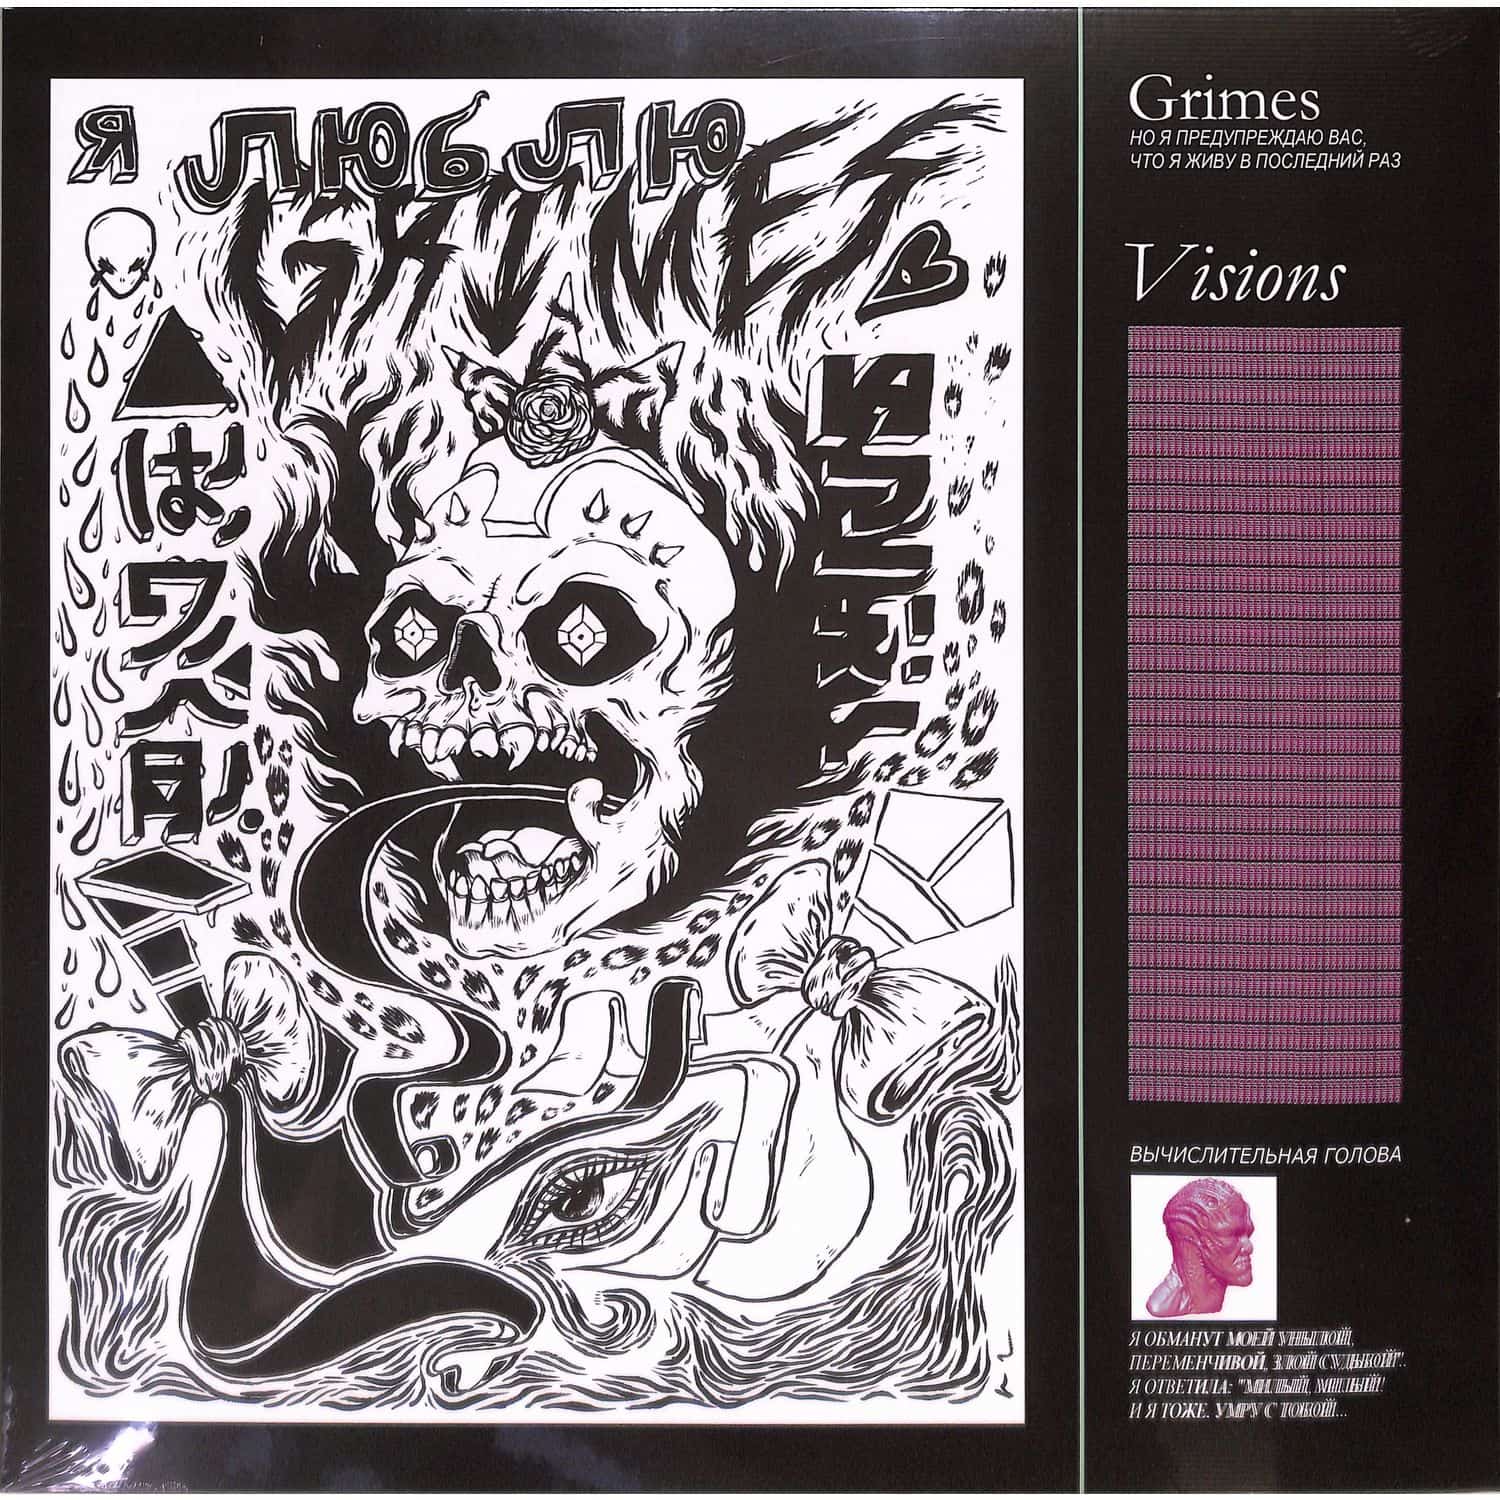 Grimes - VISIONS 